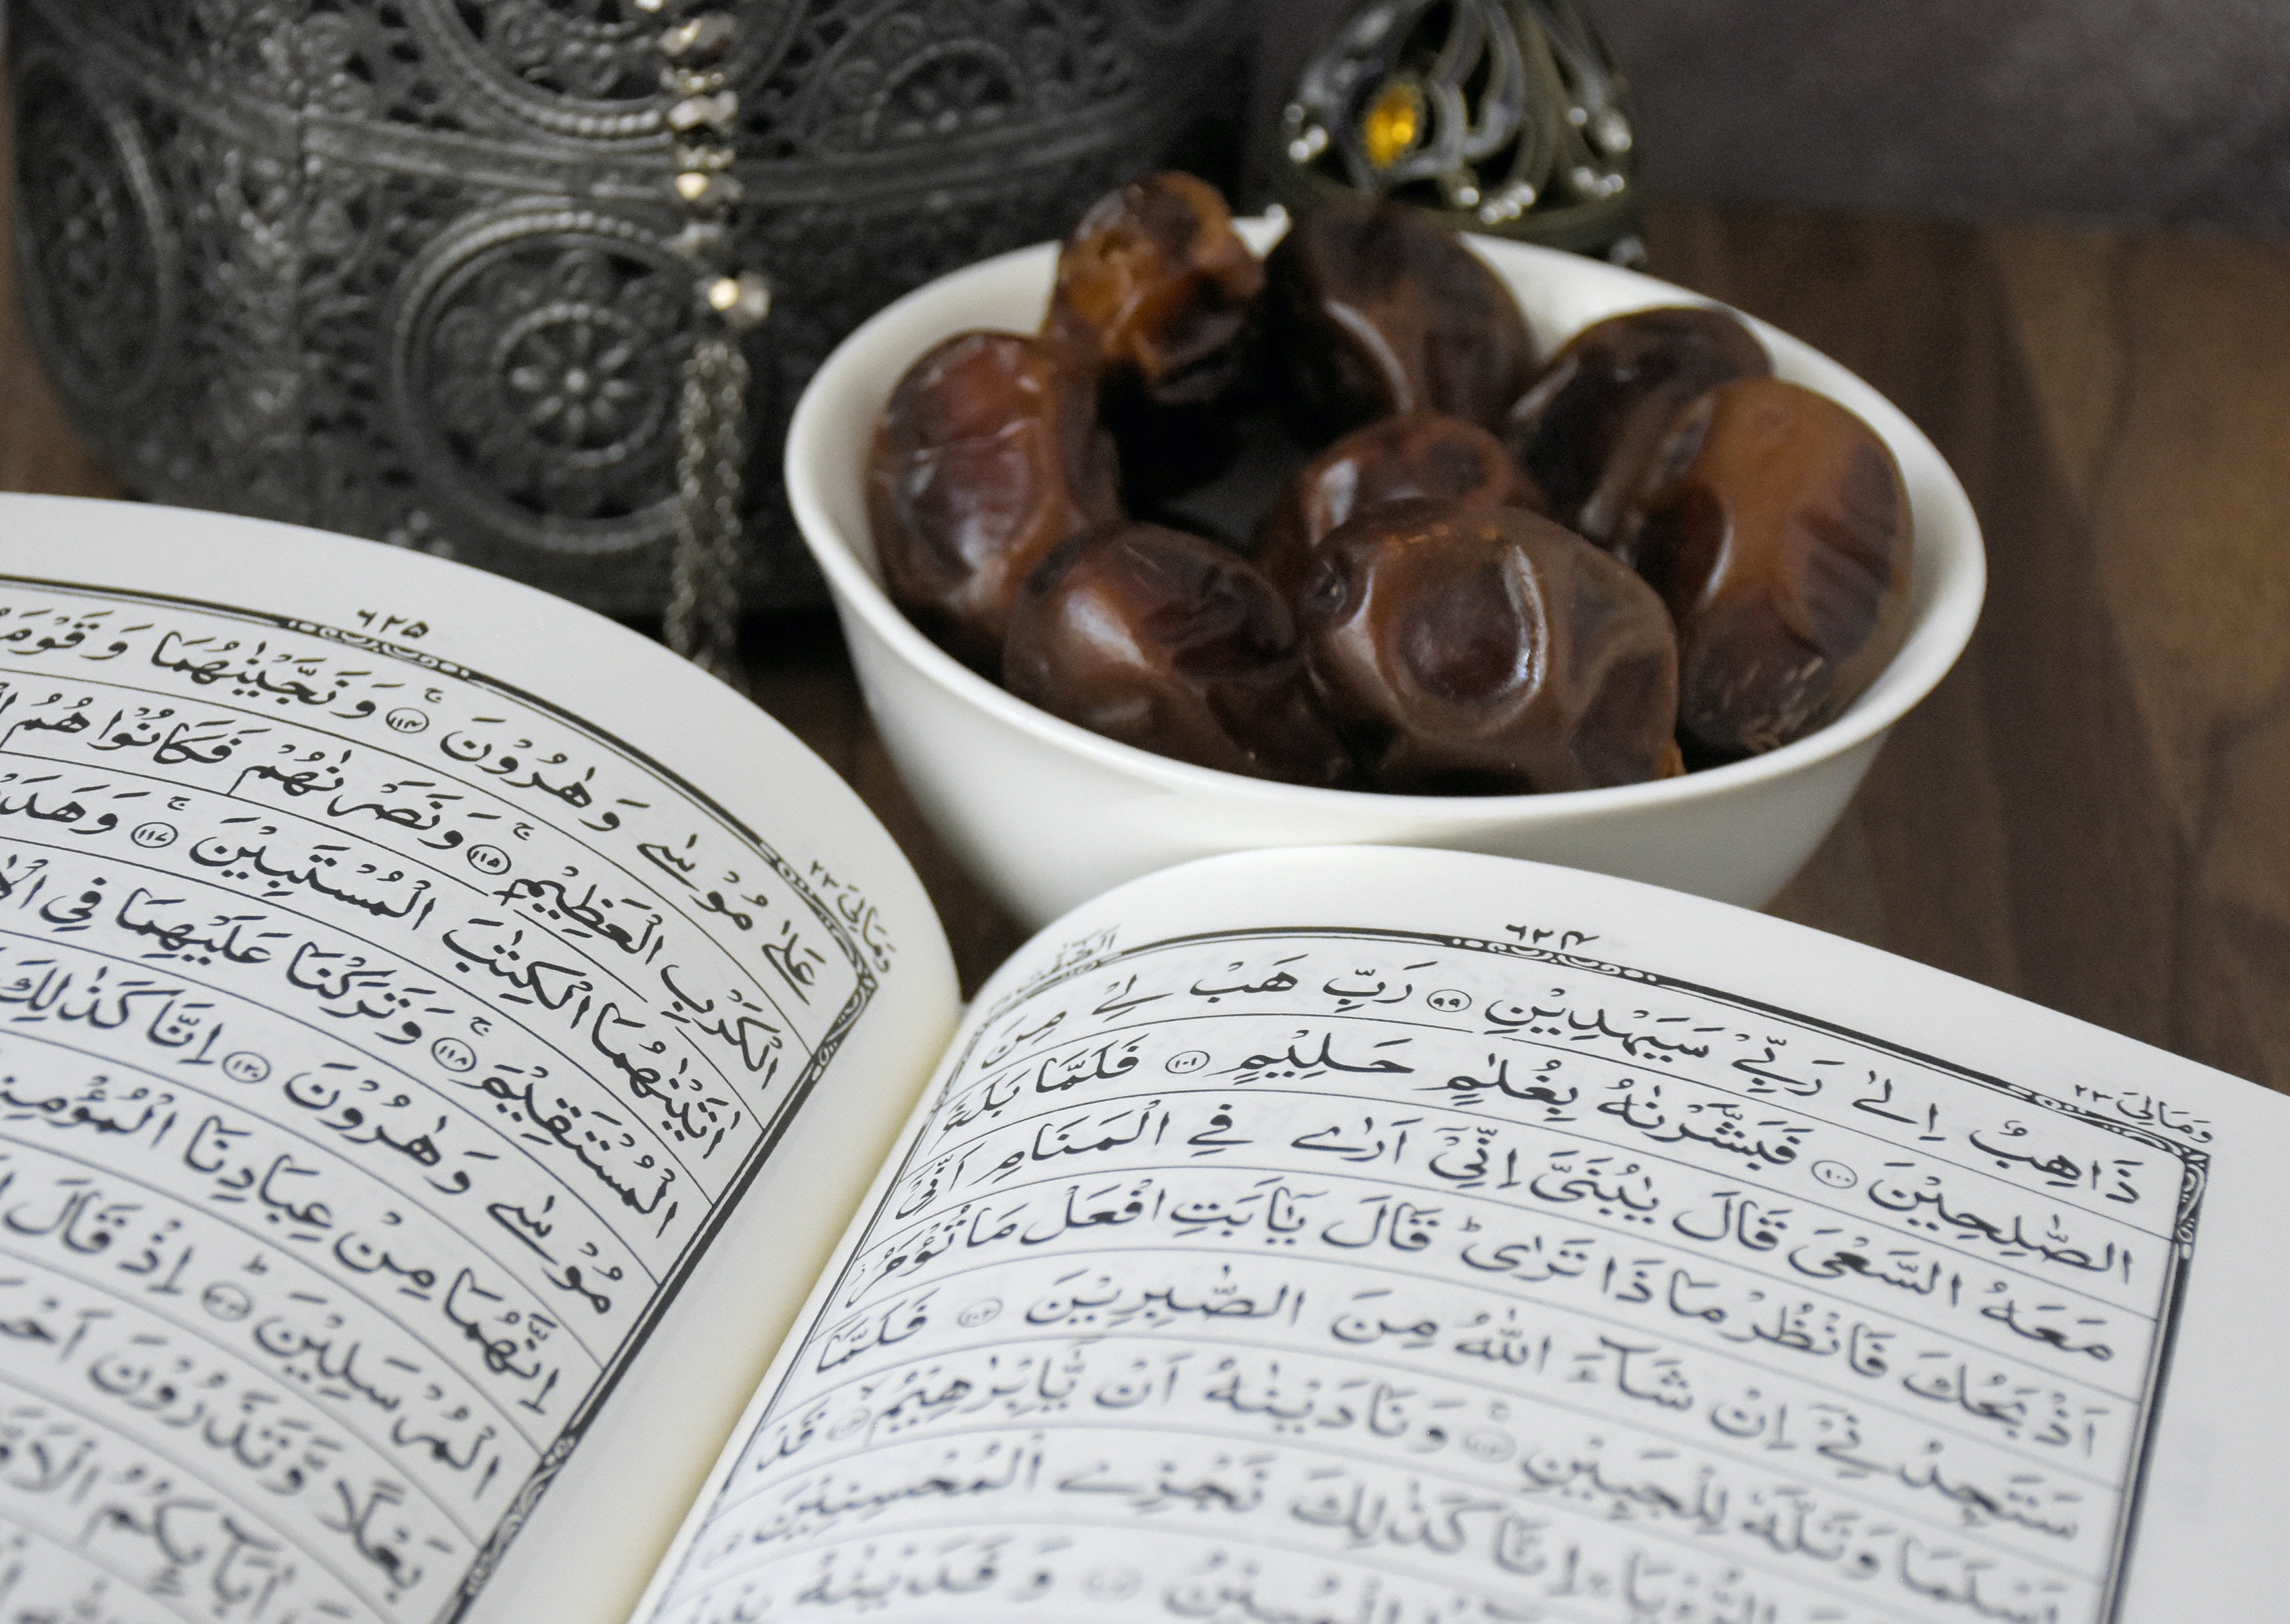 Pemantauan Hilal Awal Ramadan 2023 di 124 Titik Digelar Kemenag, Berikut Daftar Lokasinya